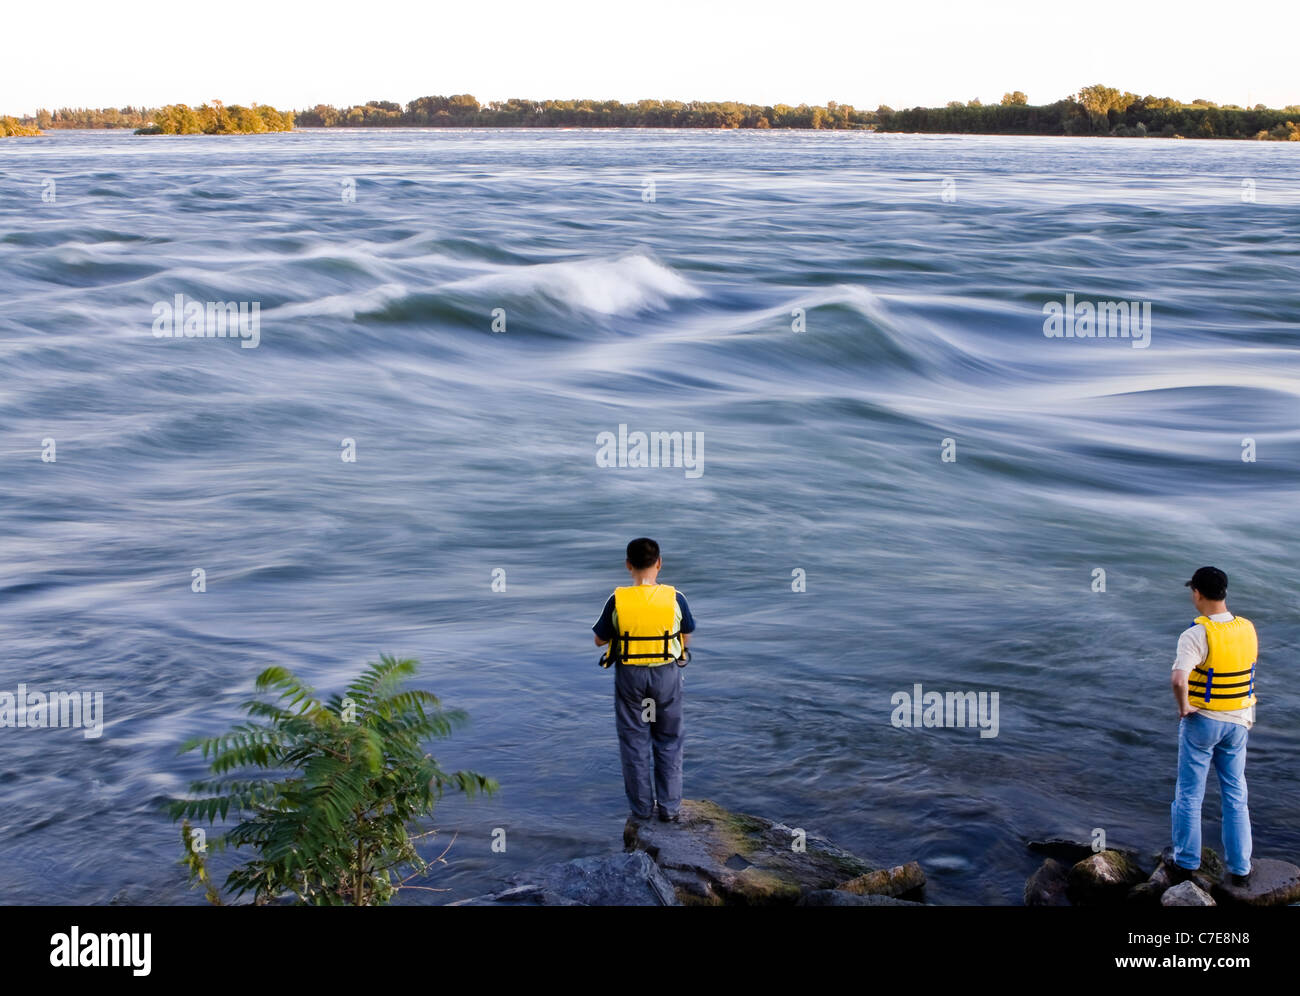 2 men wearing yellow lifesaving jackets fishing in Saint Lawrence river, Stock Photo